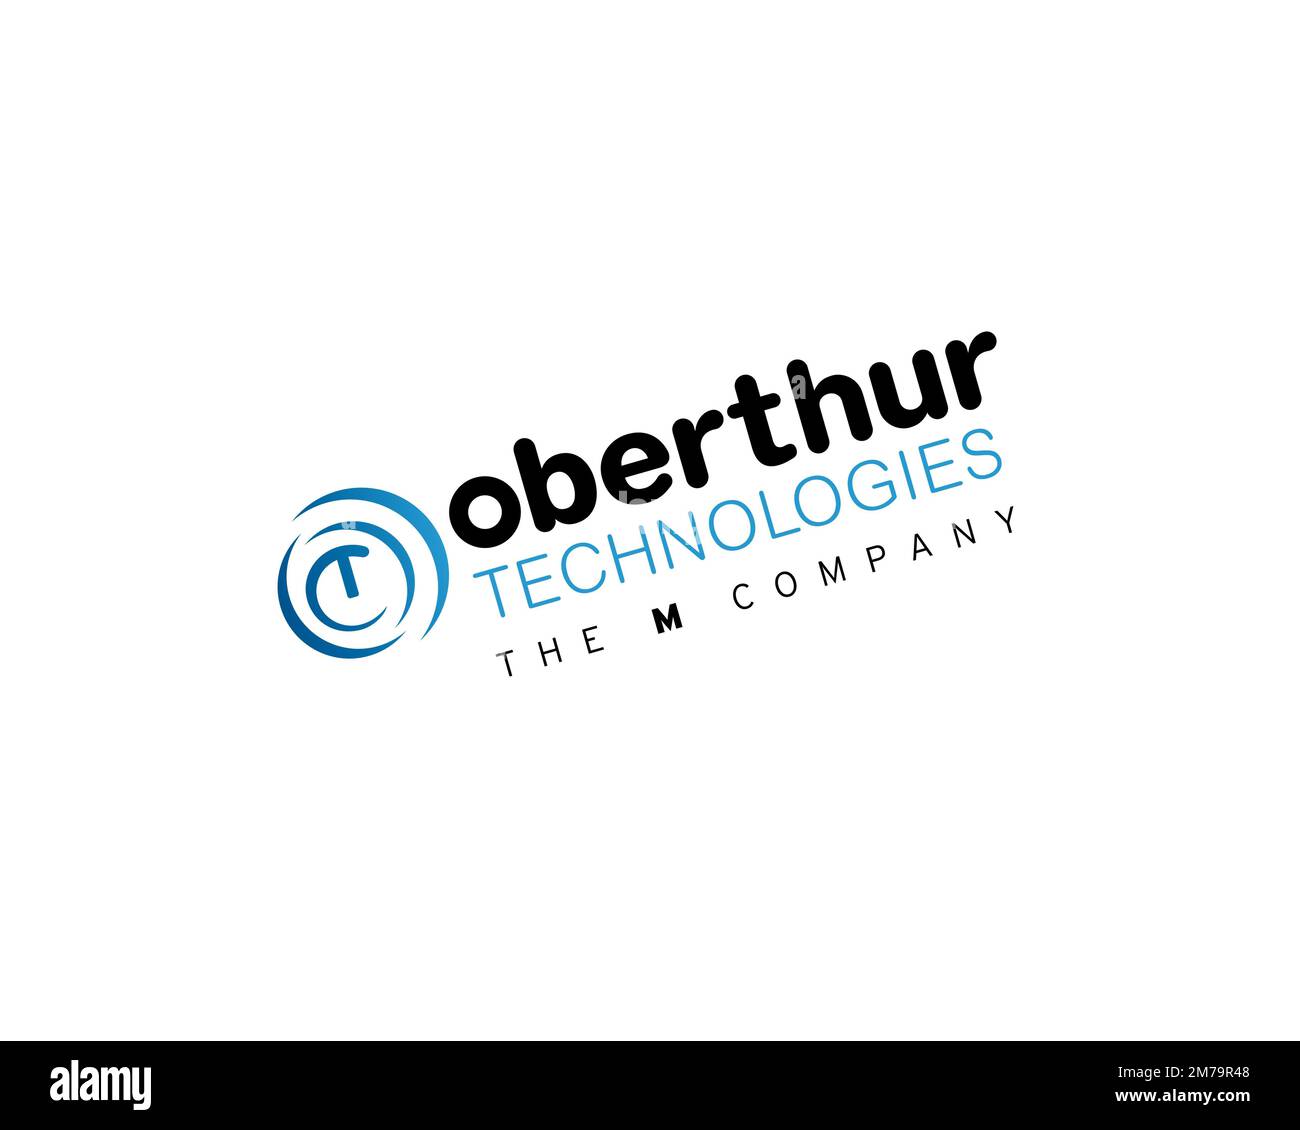 Oberthur Technologies, rotated logo, white background Stock Photo - Alamy